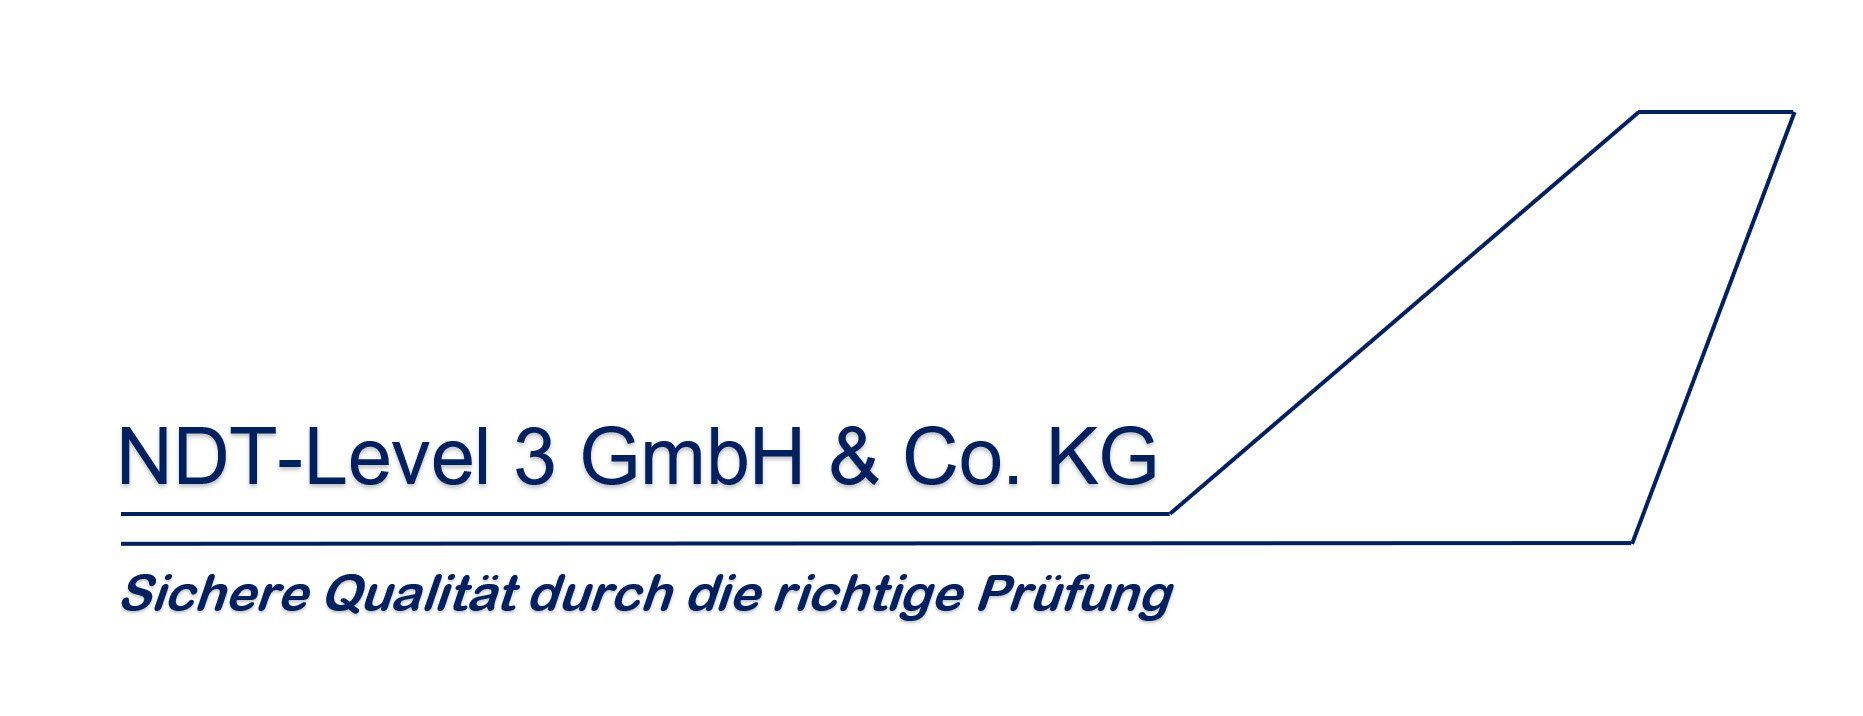 NDT - Level 3 GmbH & Co. KG